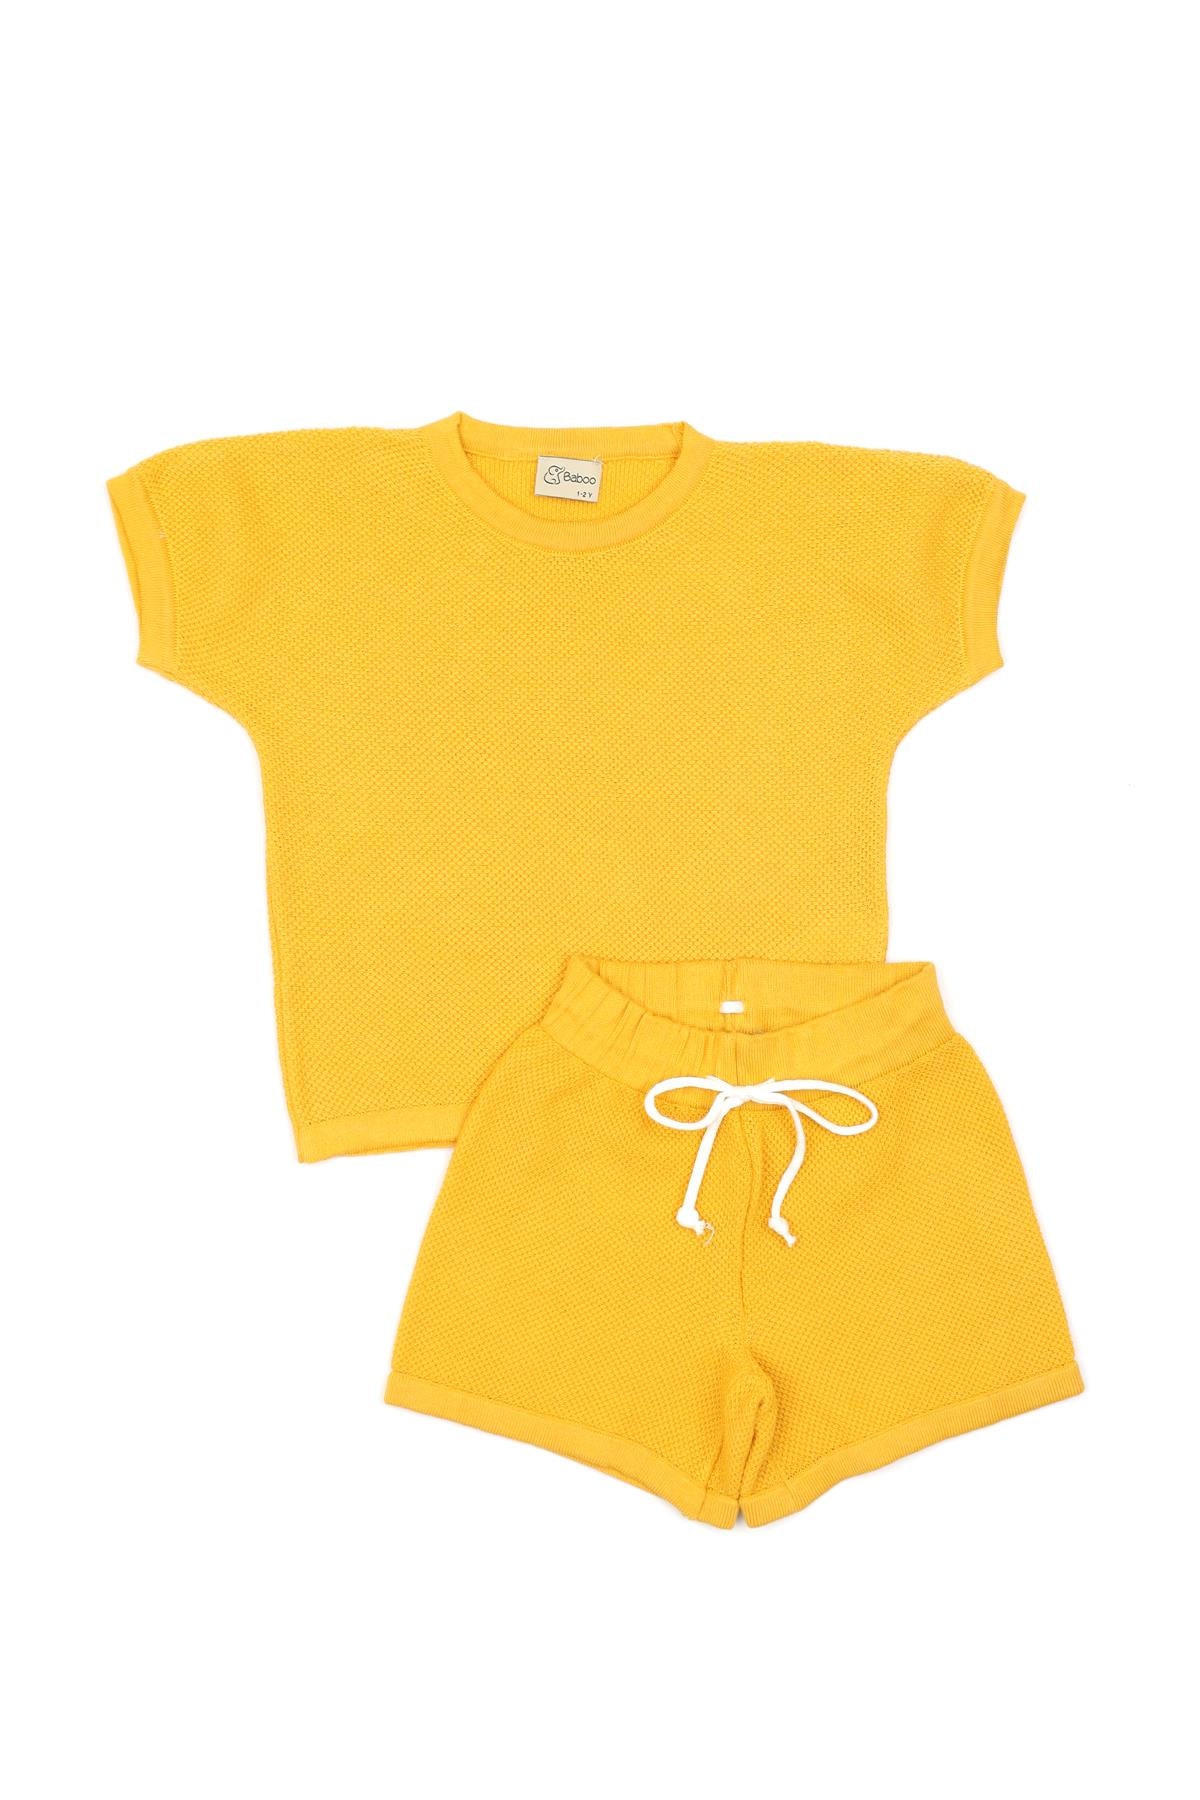 Summer Spring T-Shirt Shorts Kids Suit Yellow